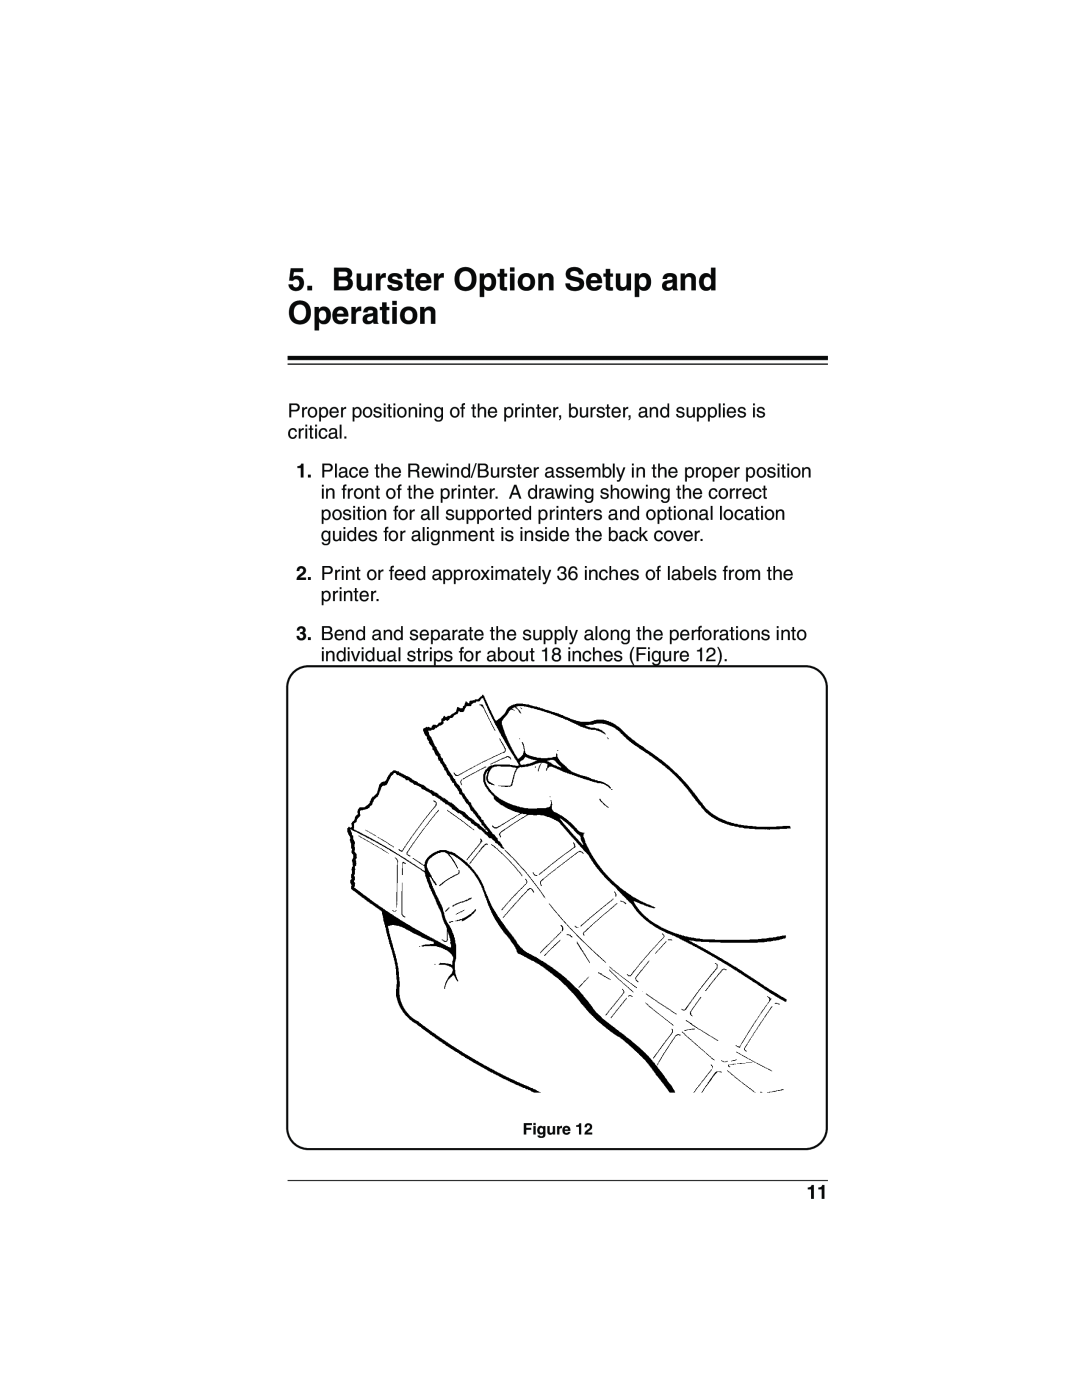 Paxar Monarch 415 manual Burster Option Setup and Operation 